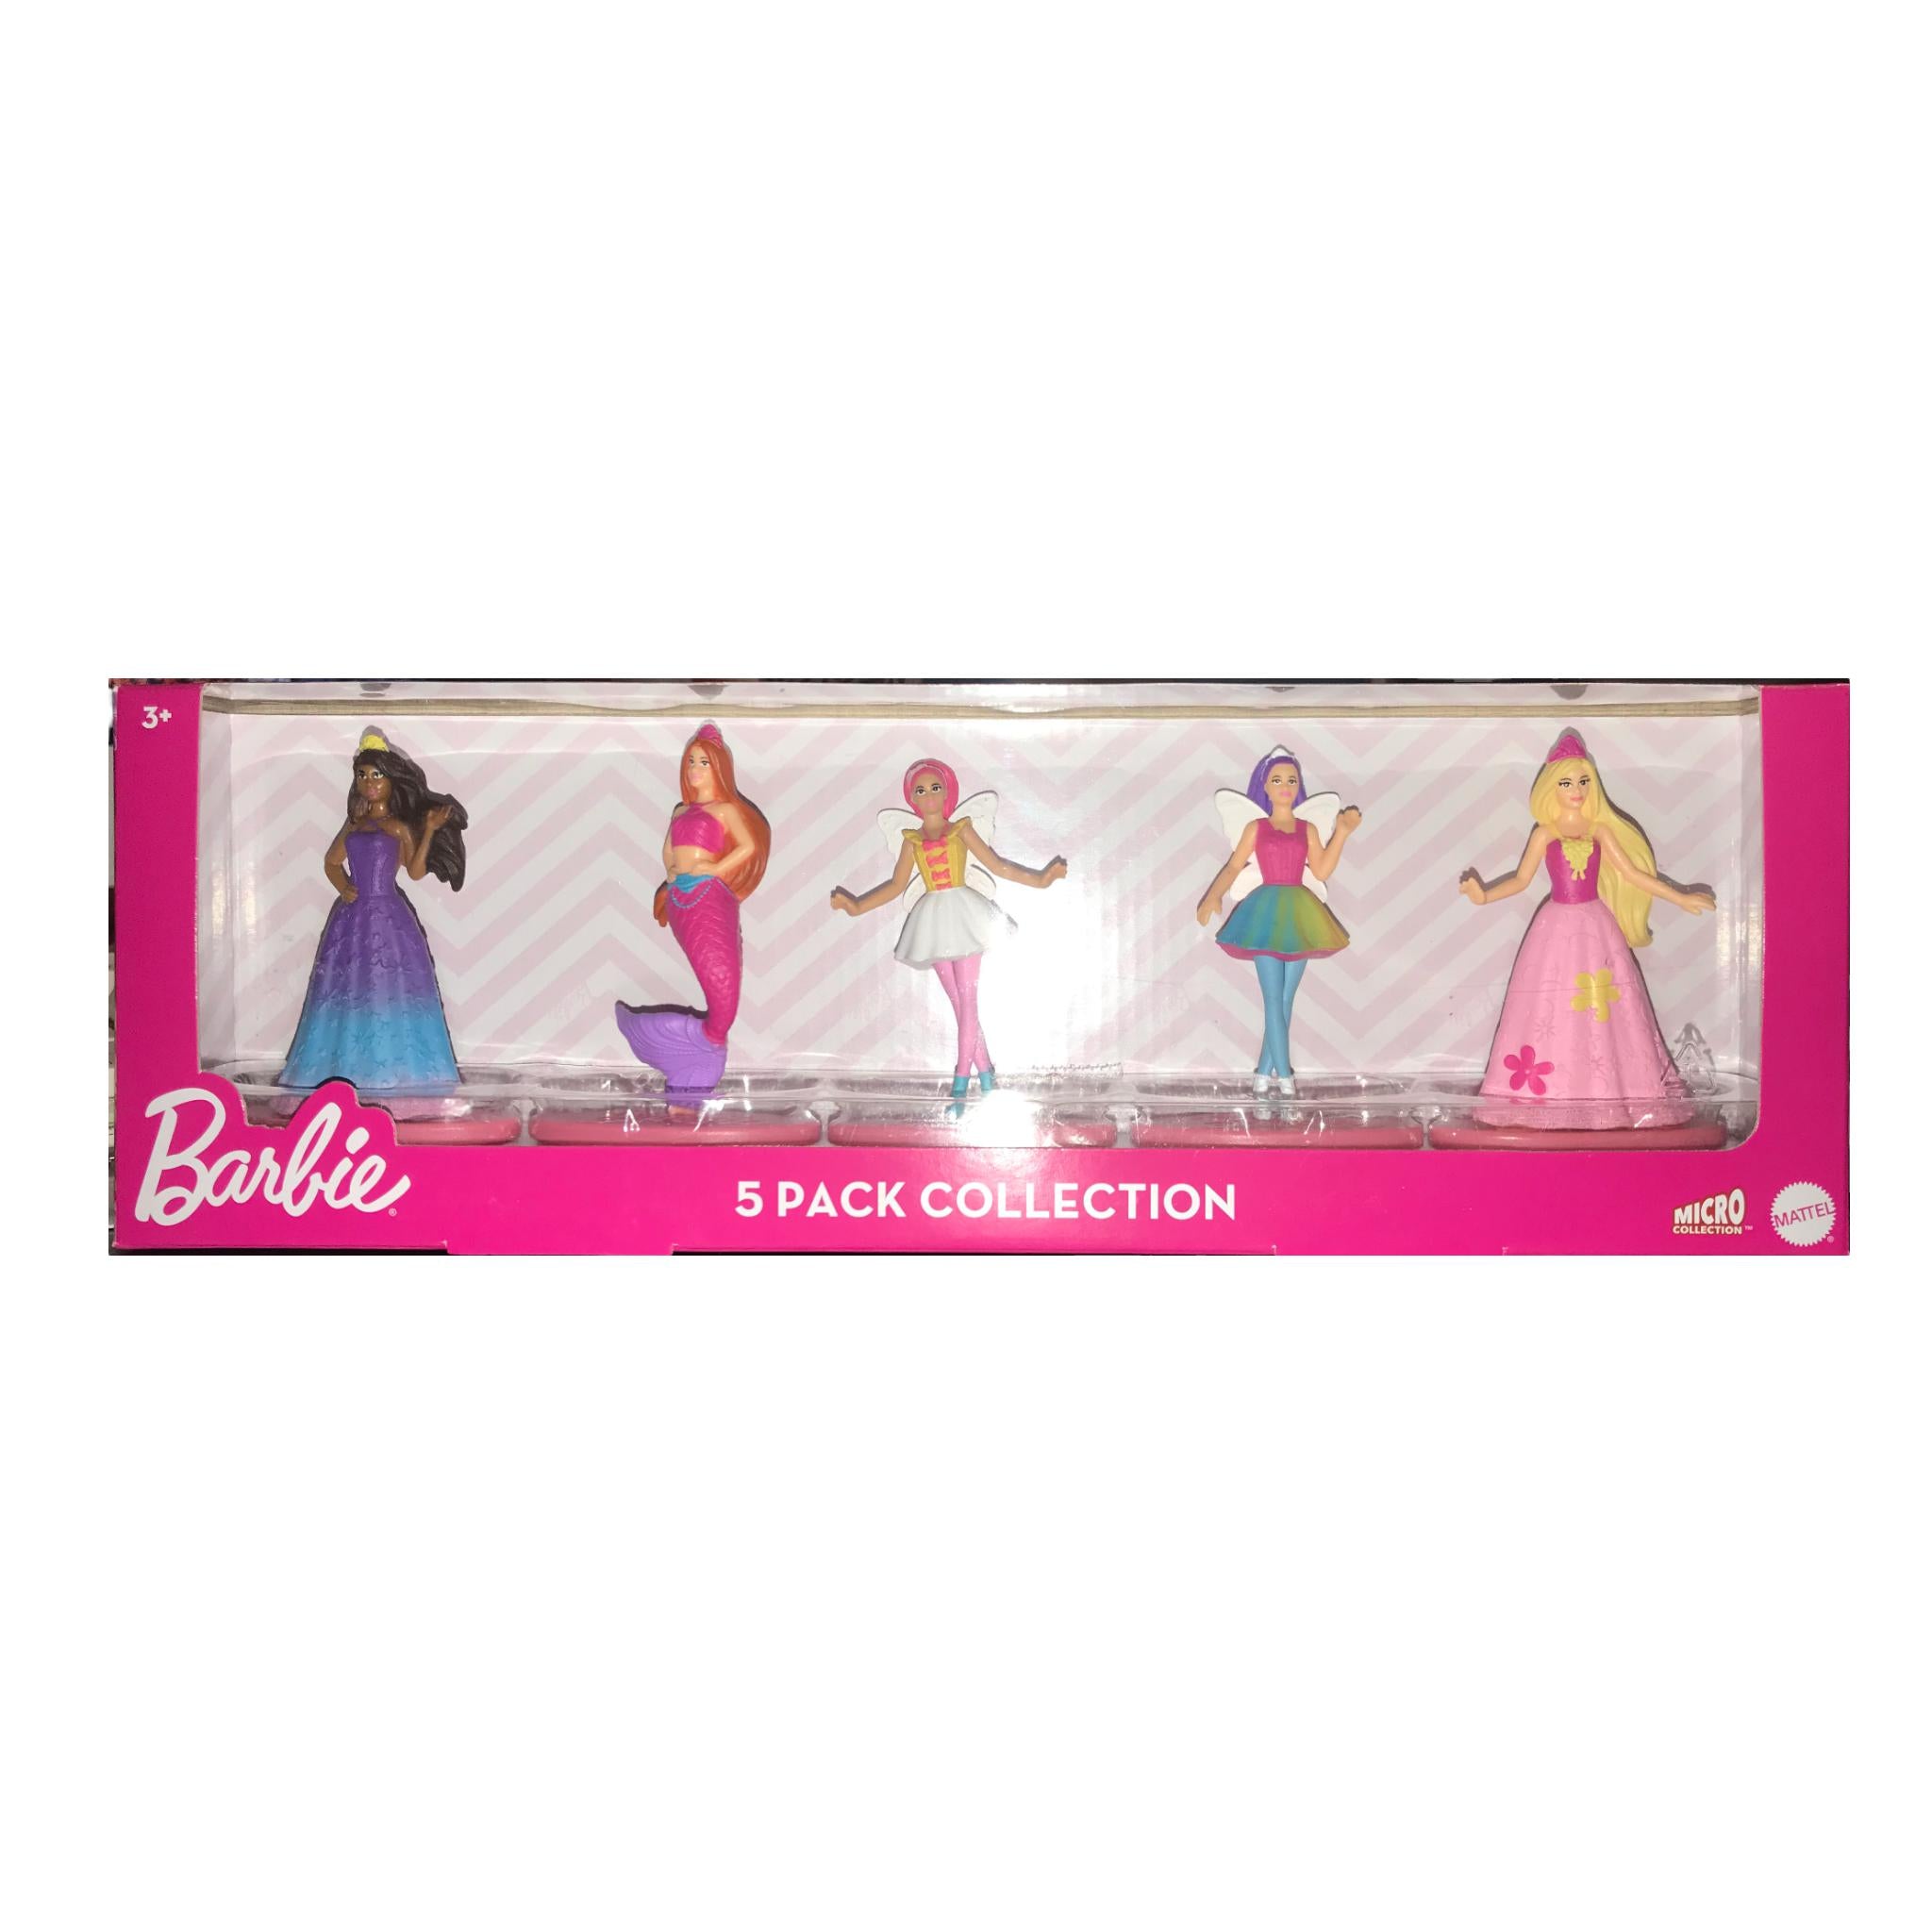 Barbie 5 Pack Mini Figure Collection